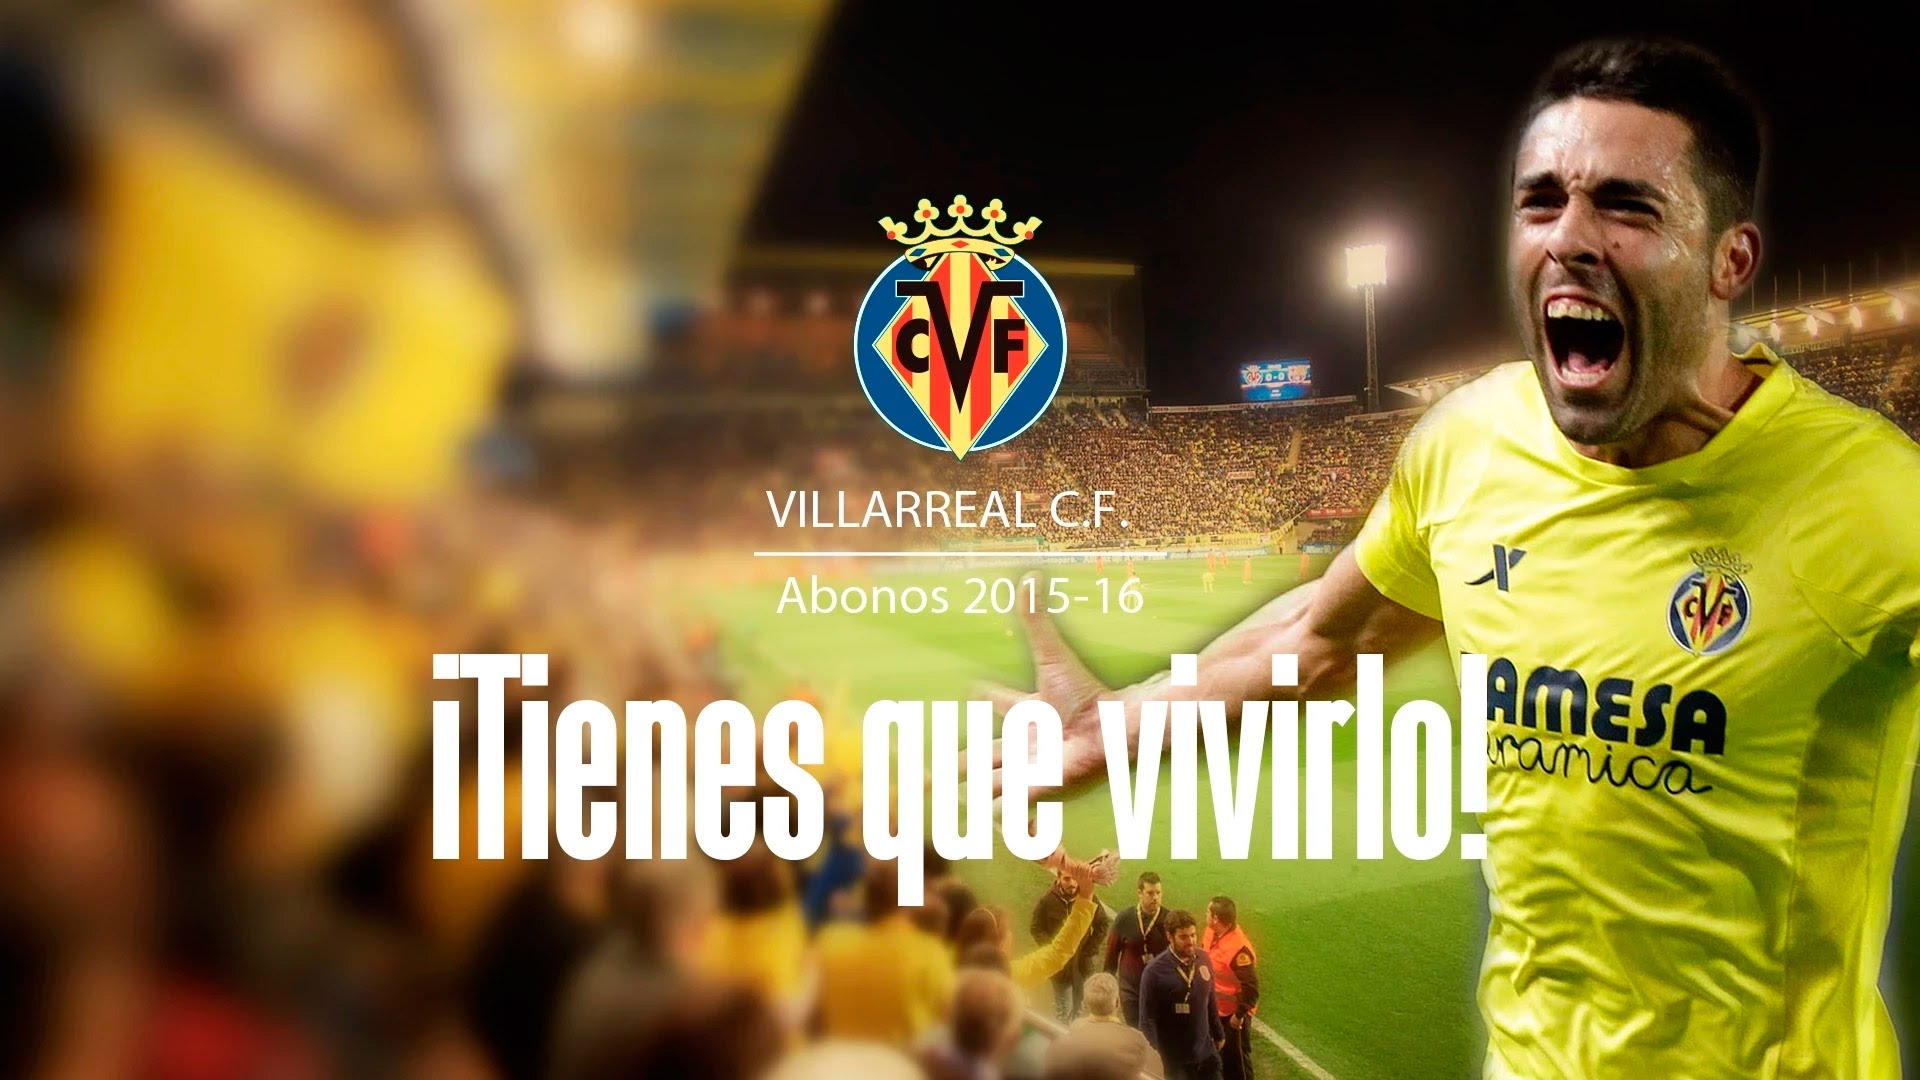 Villarreal Cf Wallpaper And Background Image